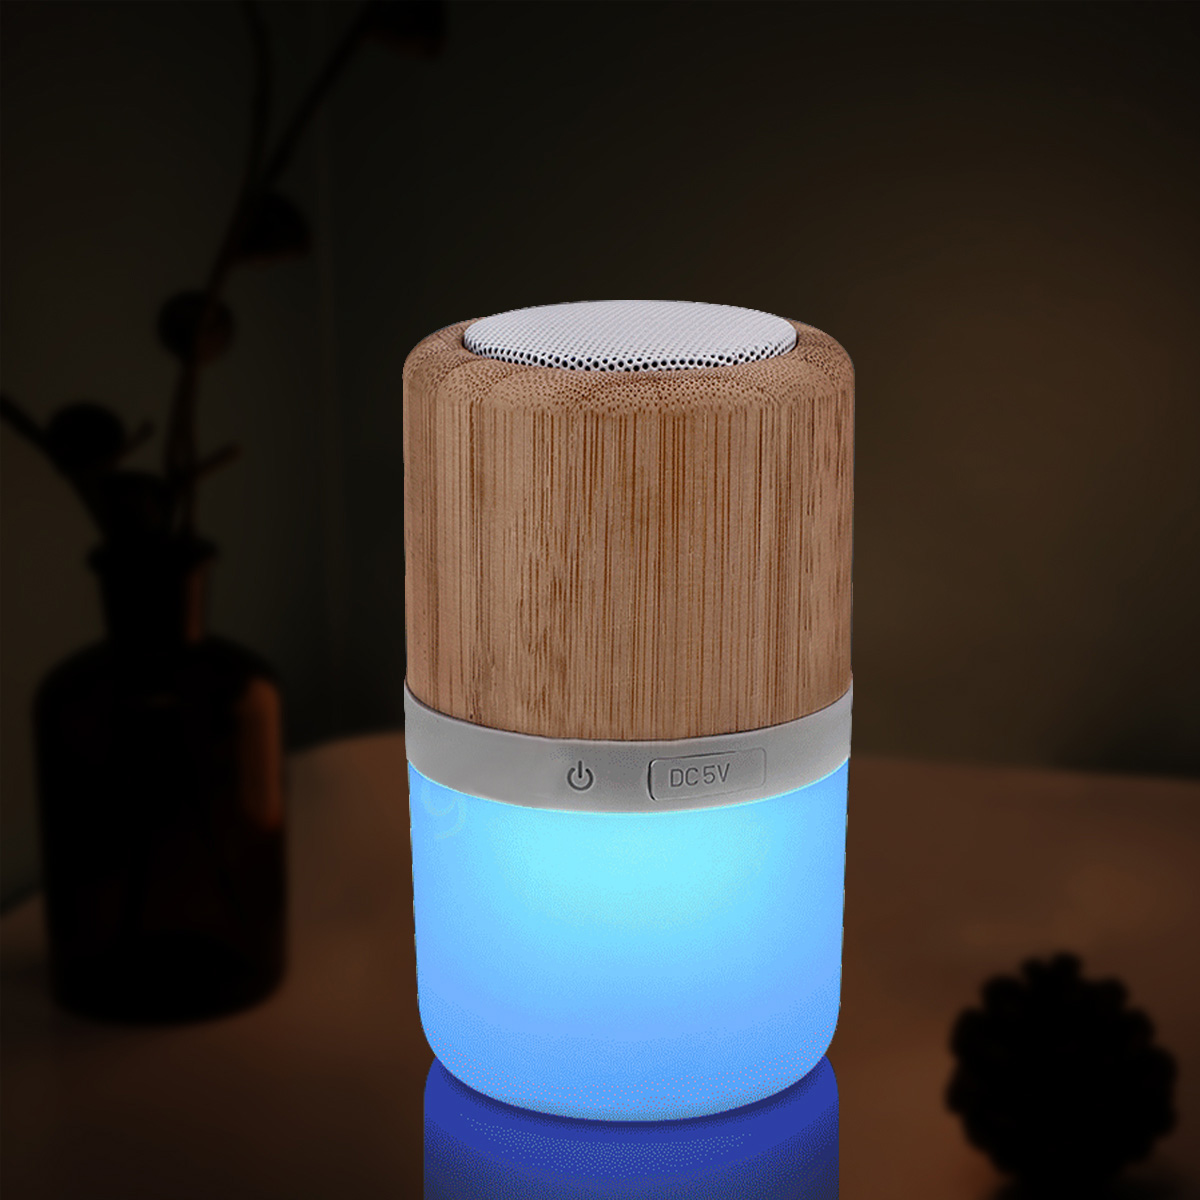 Light Up Bluetooth Speaker